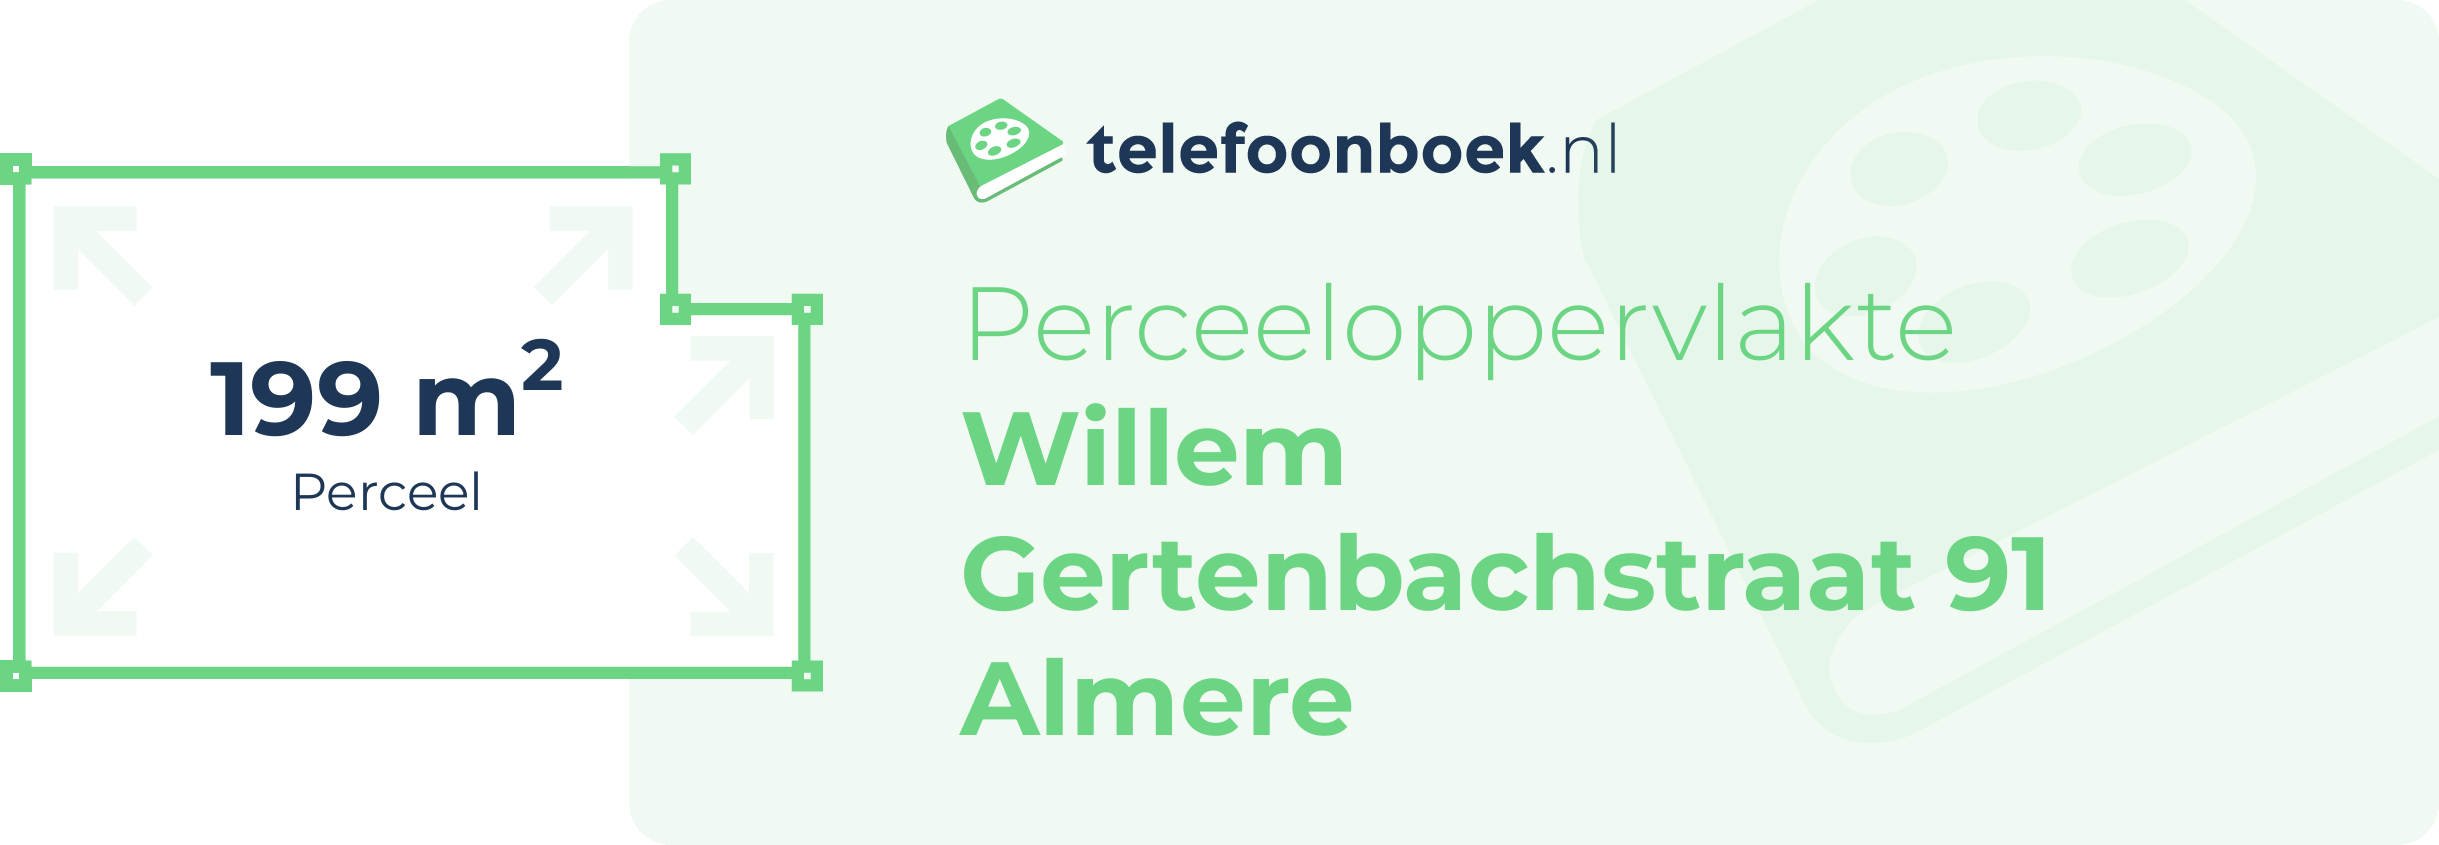 Perceeloppervlakte Willem Gertenbachstraat 91 Almere